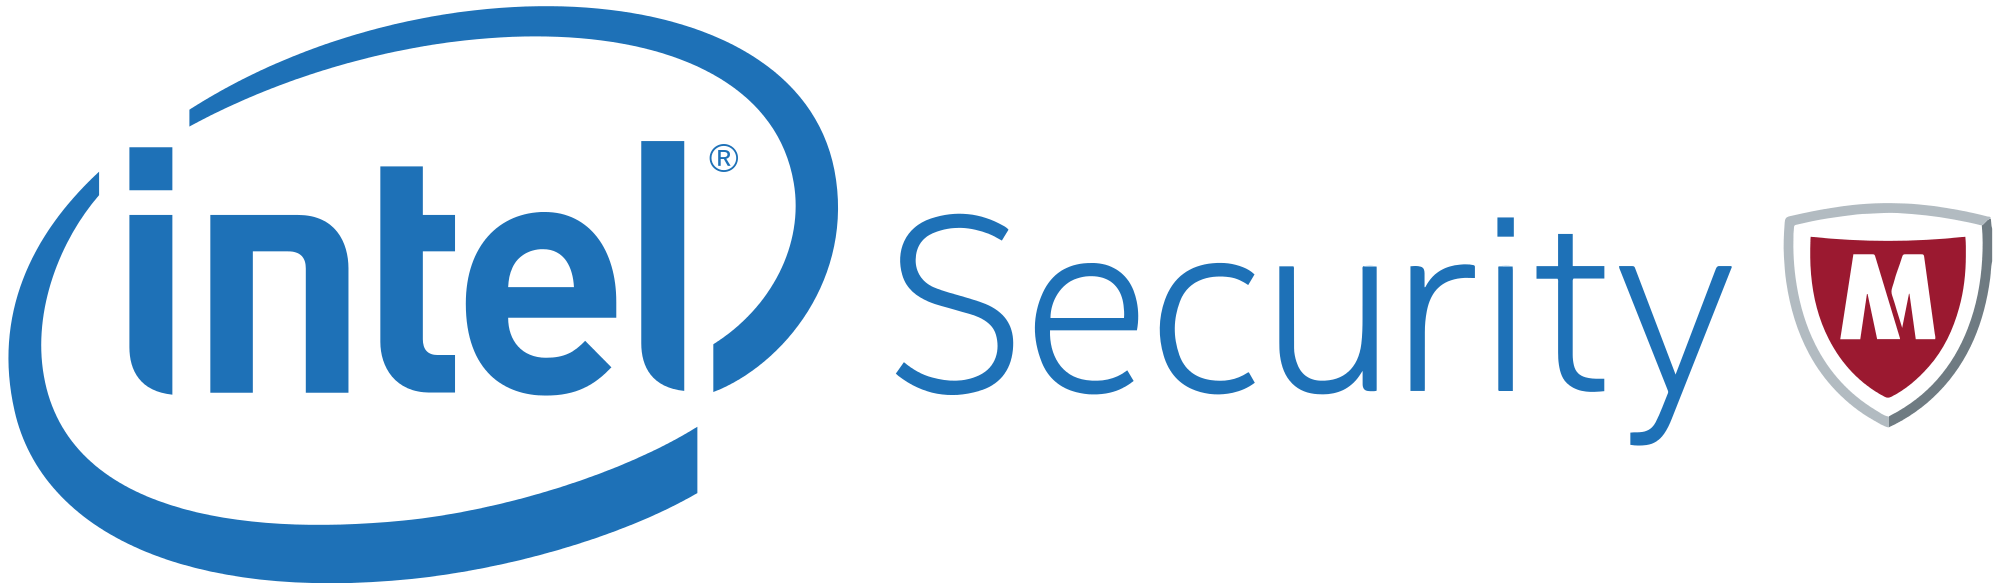 Intel Security Logo - Intel Security logo.svg